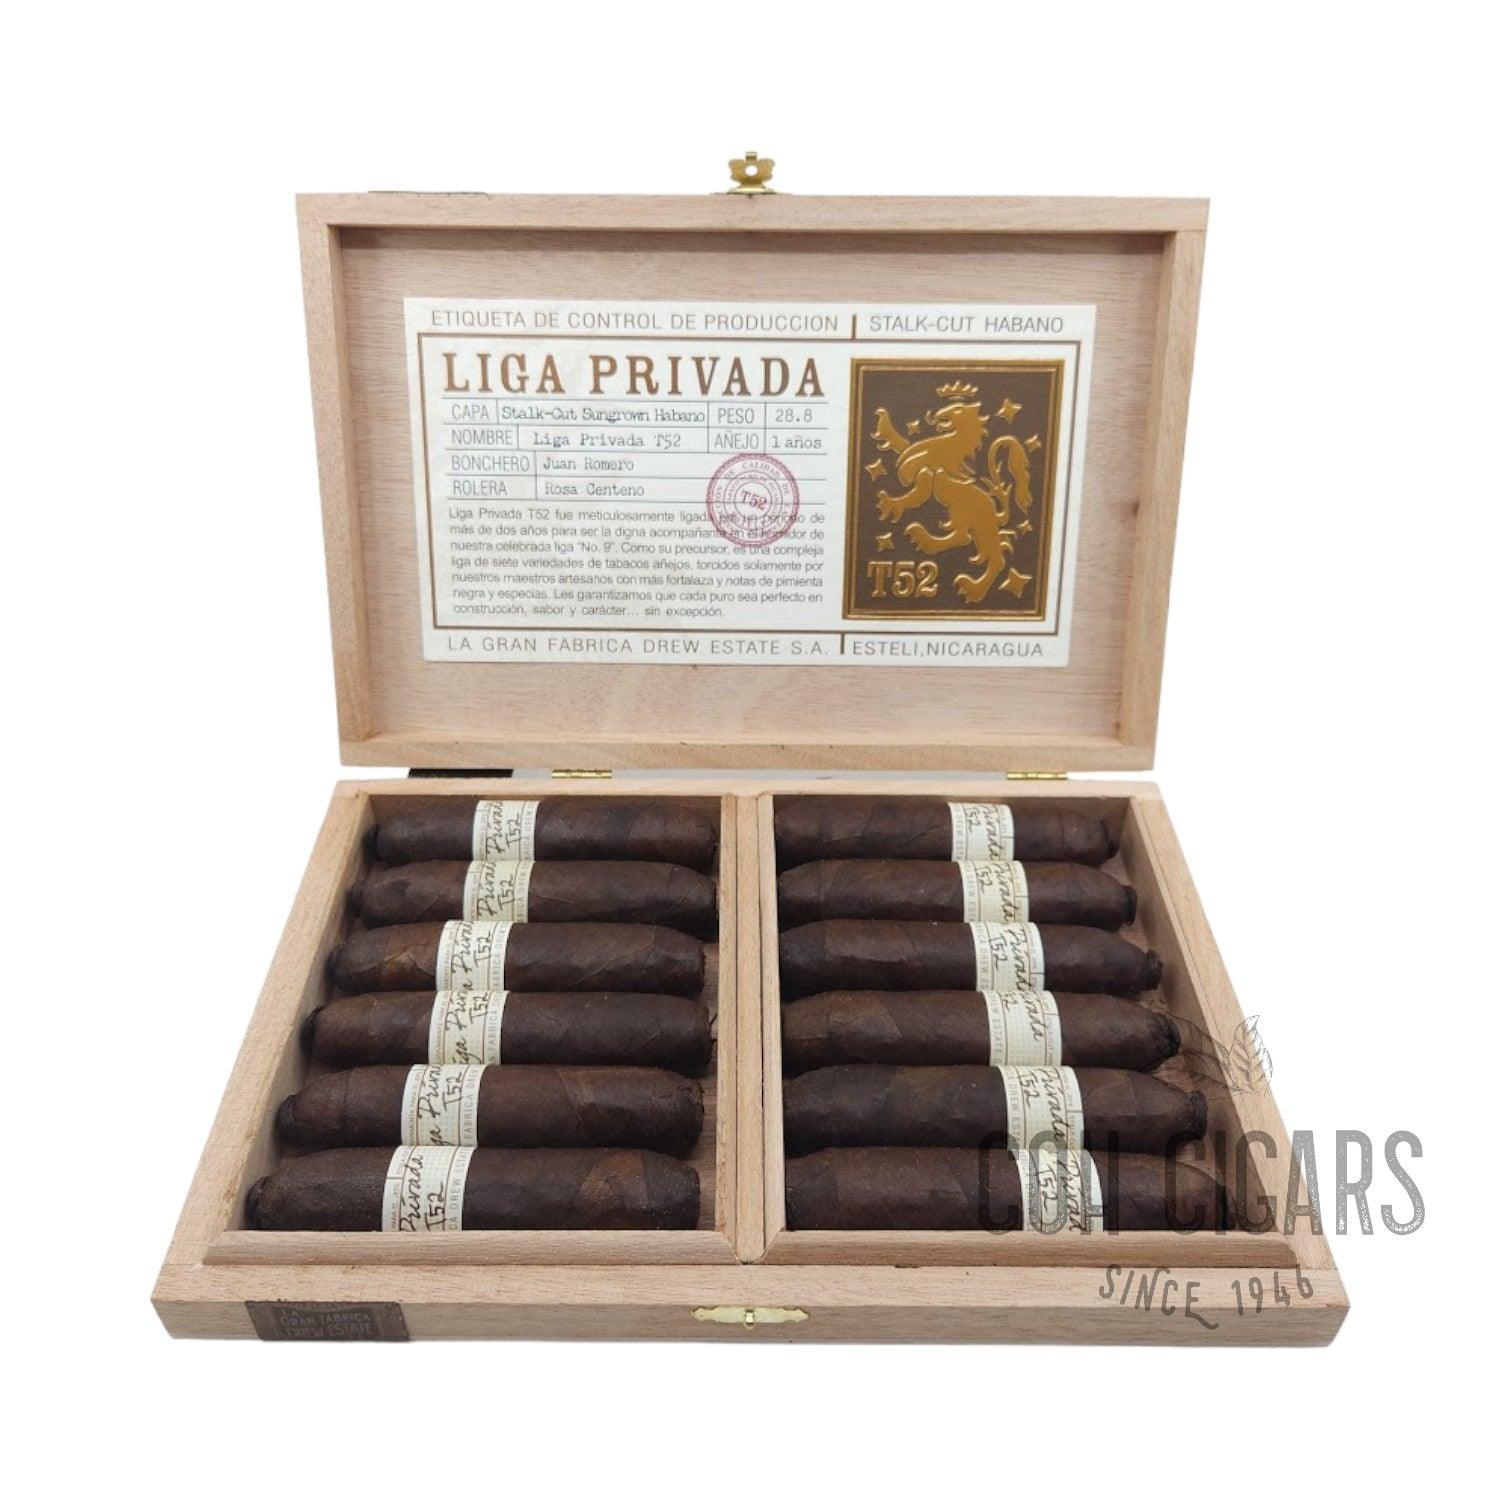 Drew Estate Cigar | Liga Privada T52 Flying Pig | Box 12 - HK CohCigars